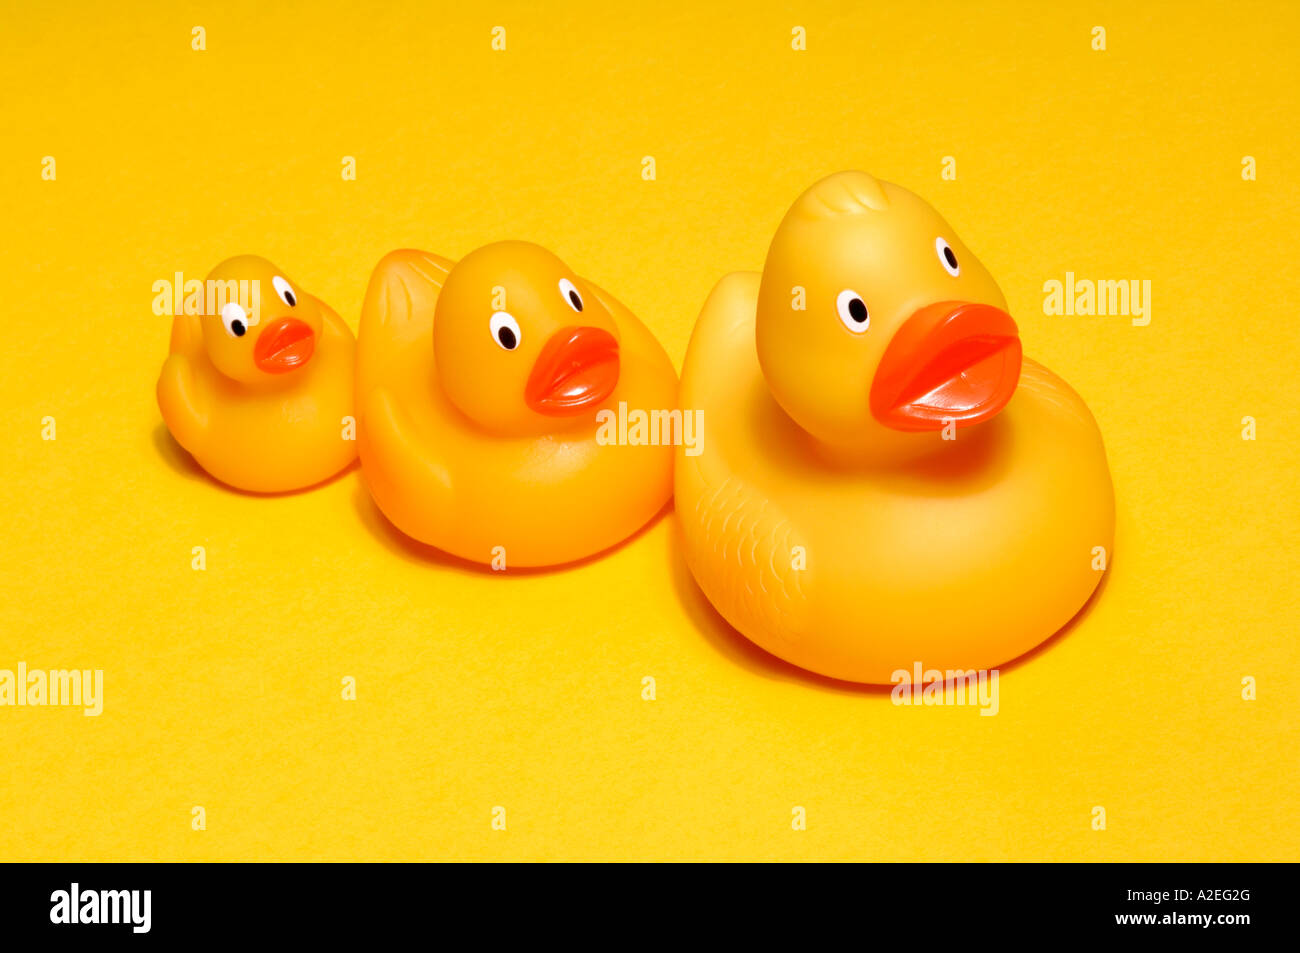 3 yellow rubber ducks Stock Photo